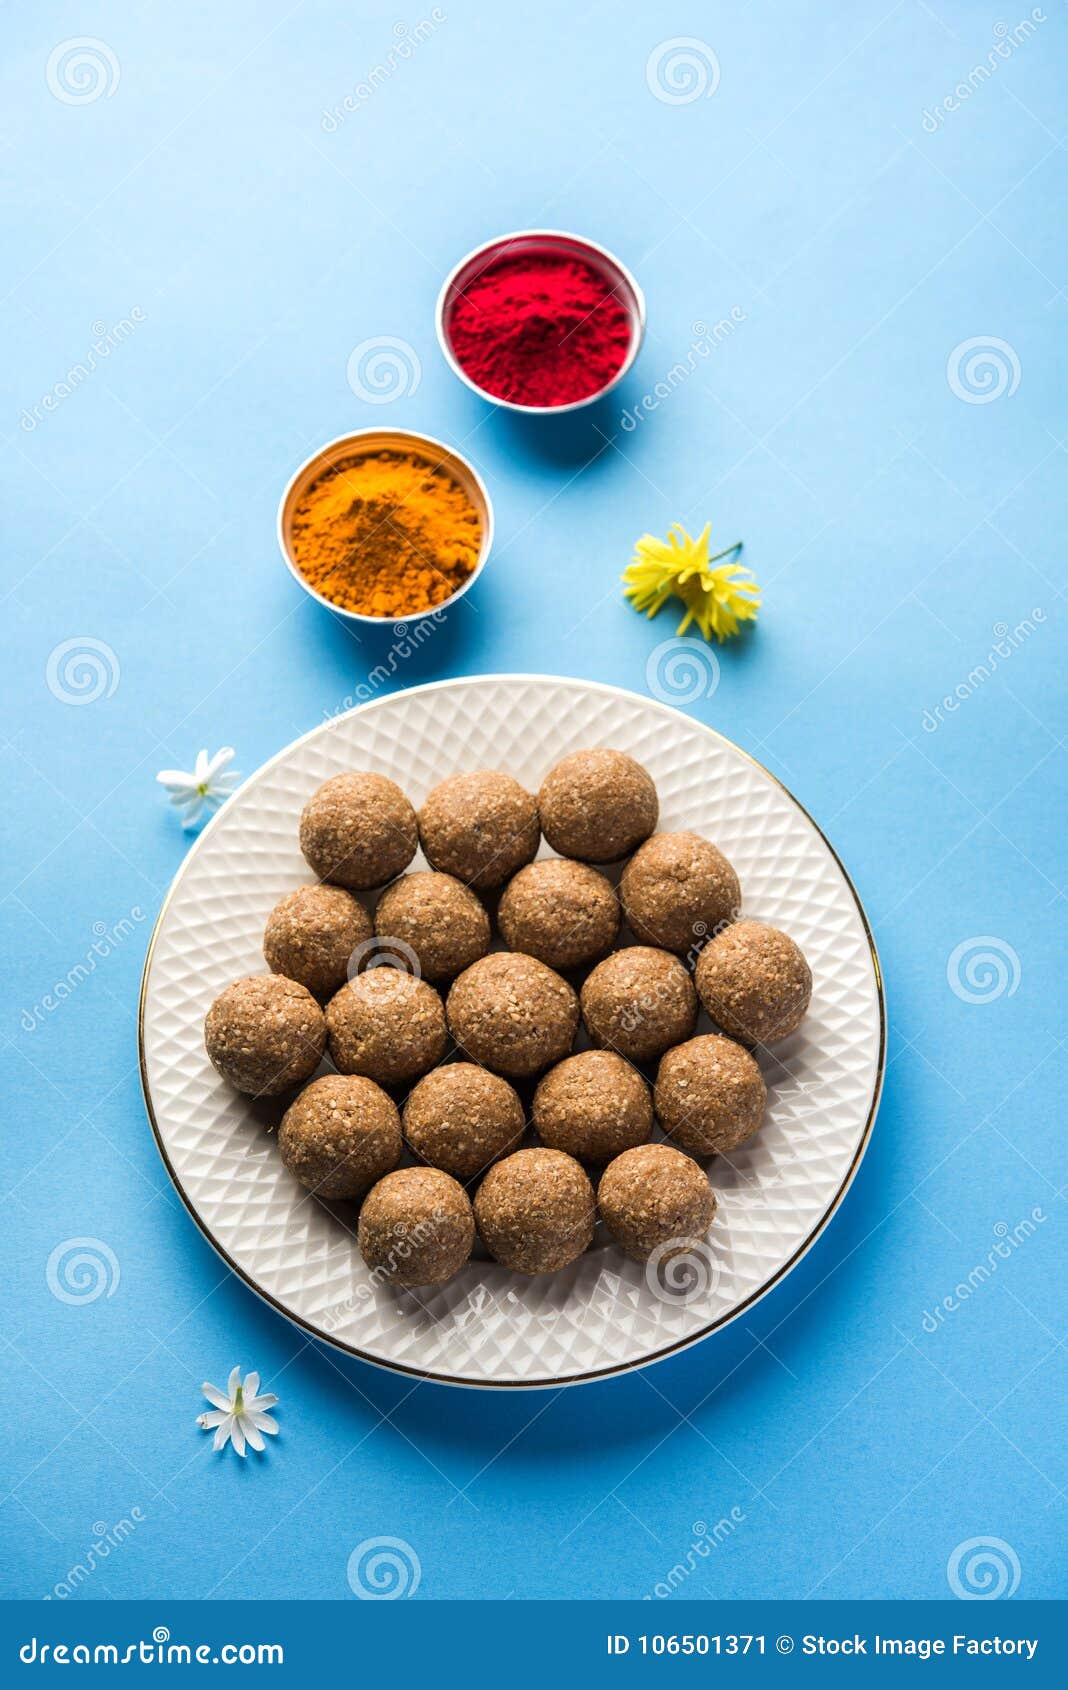 happy makar sankranti - tilgul or til gul with haldi kumkum